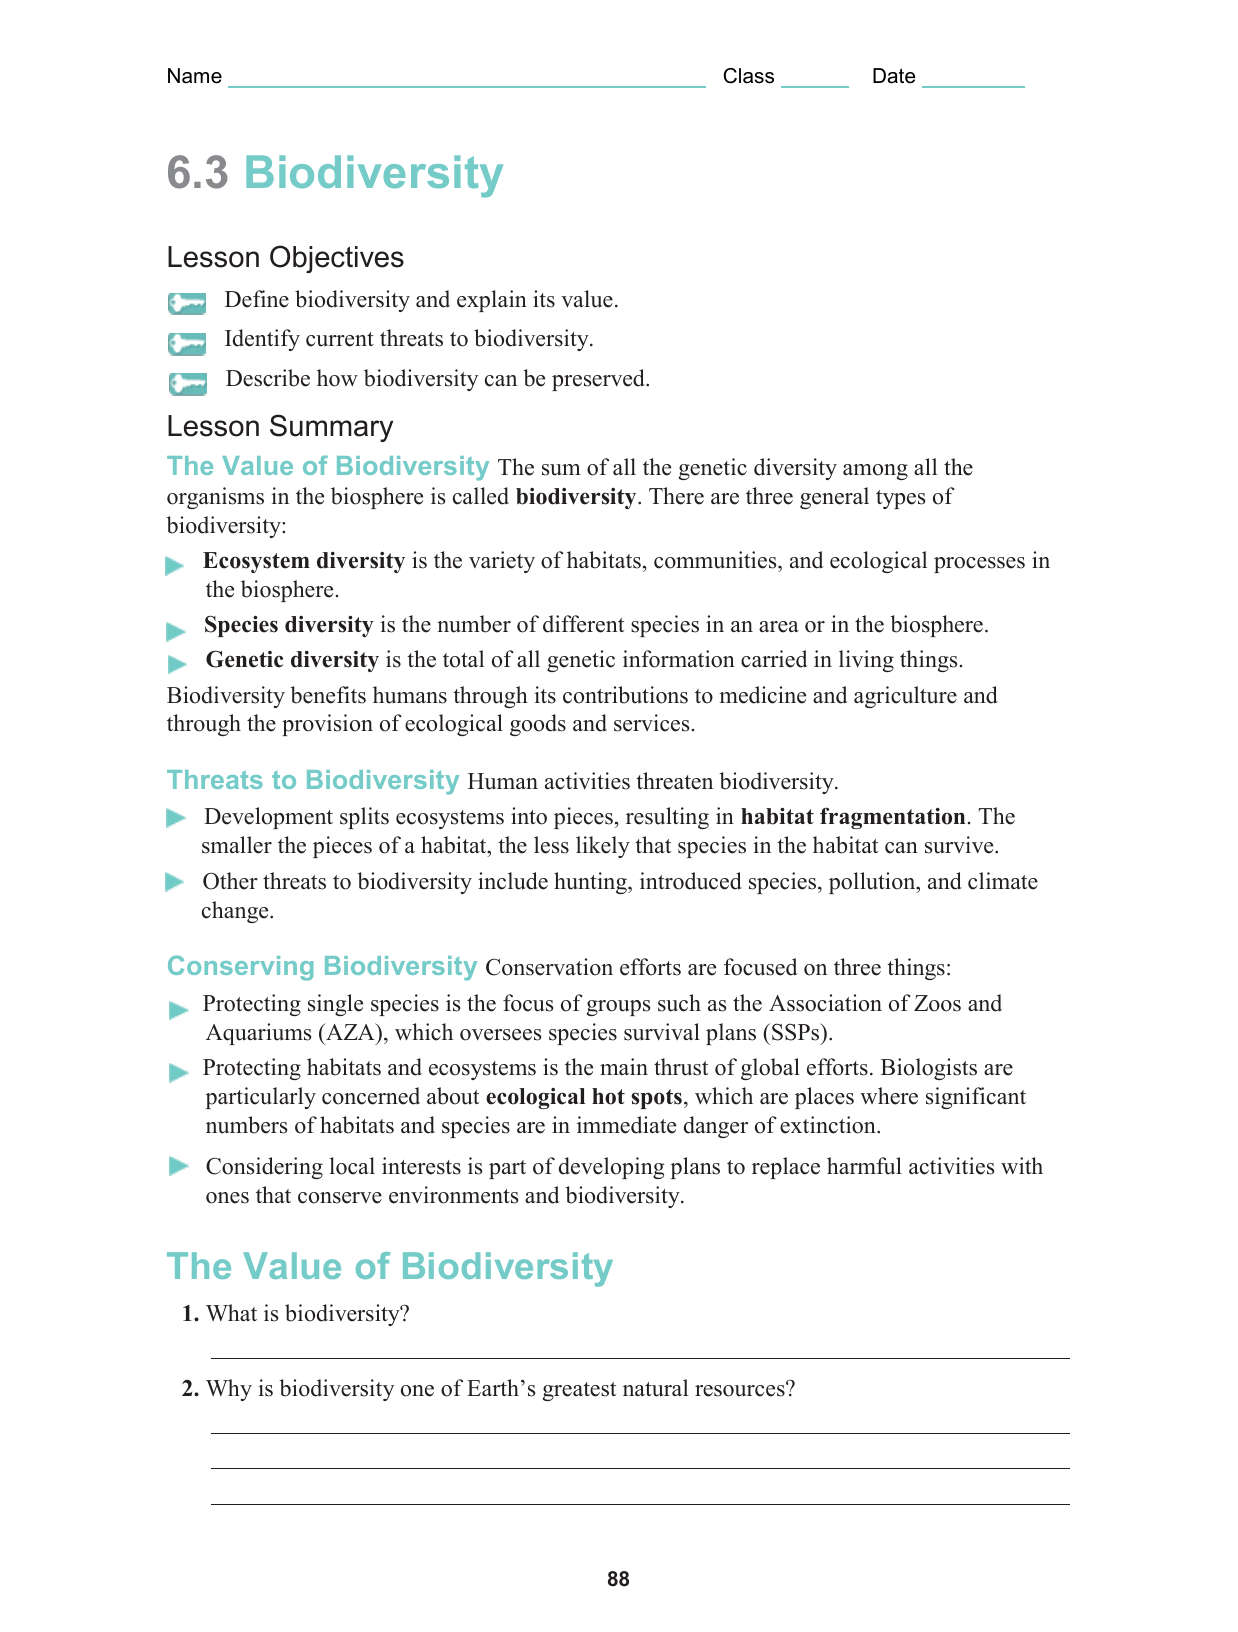 Threats To Biodiversity Worksheet - Nidecmege For 6 3 Biodiversity Worksheet Answers